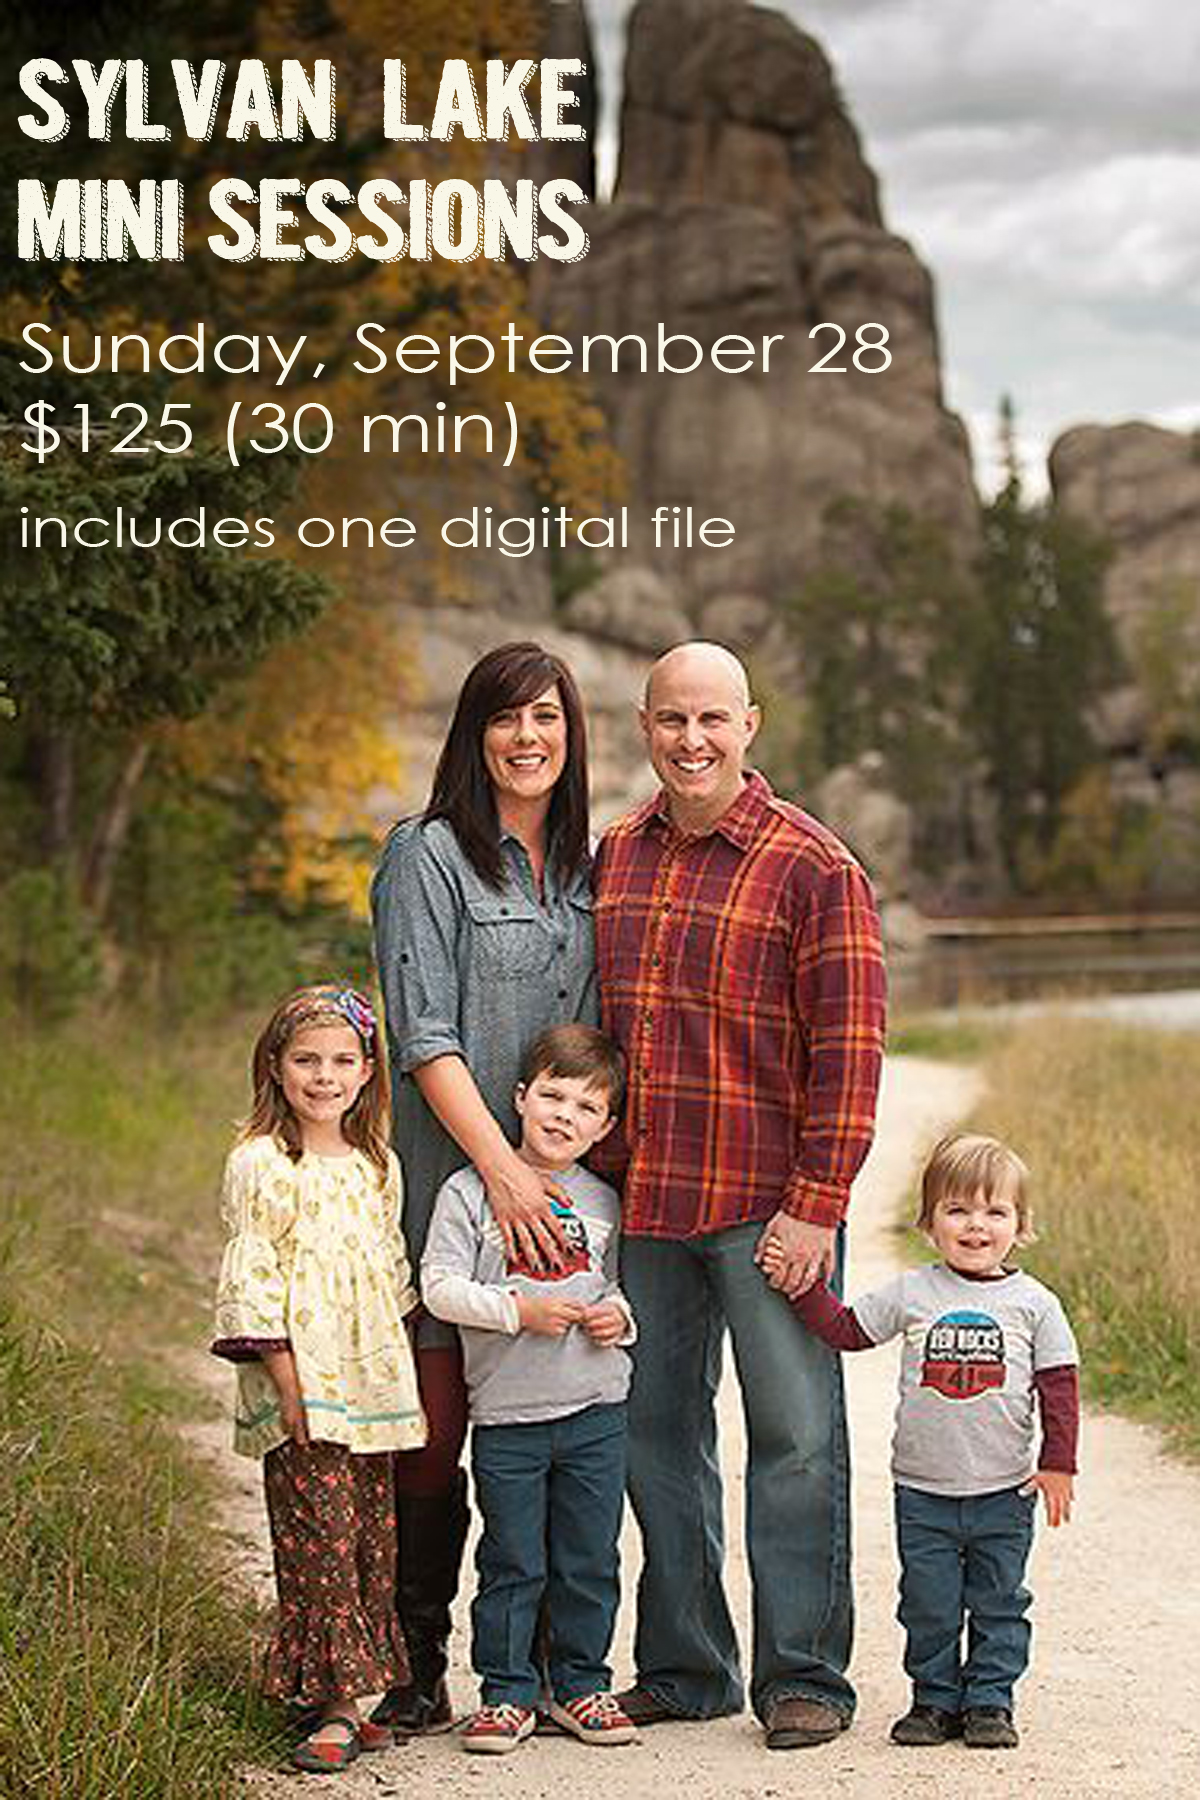 Sylvan Lake Mini Sessions | Sunday, September 28 | $125 includes one digital file (30 min) 